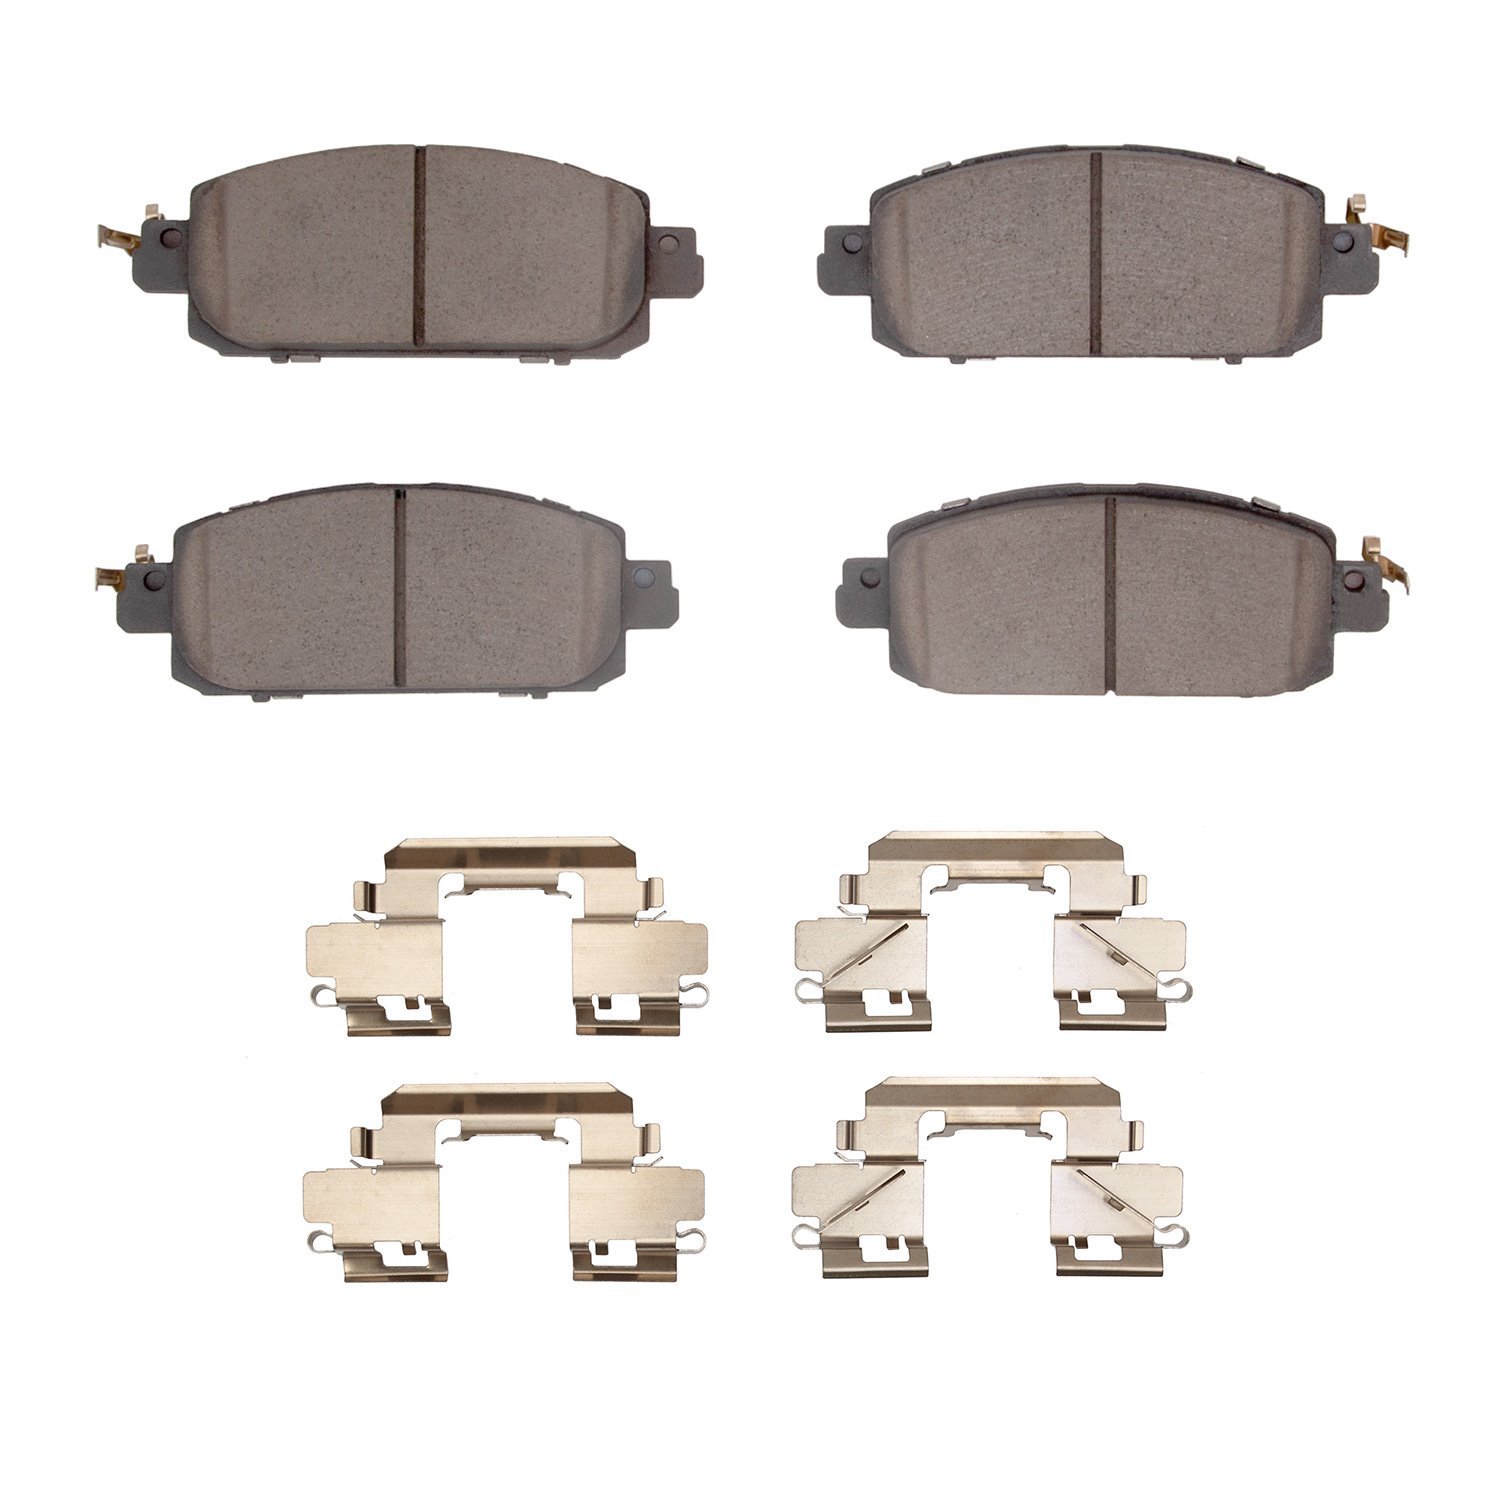 1551-2310-01 5000 Advanced Ceramic Brake Pads & Hardware Kit, Fits Select Infiniti/Nissan, Position: Front